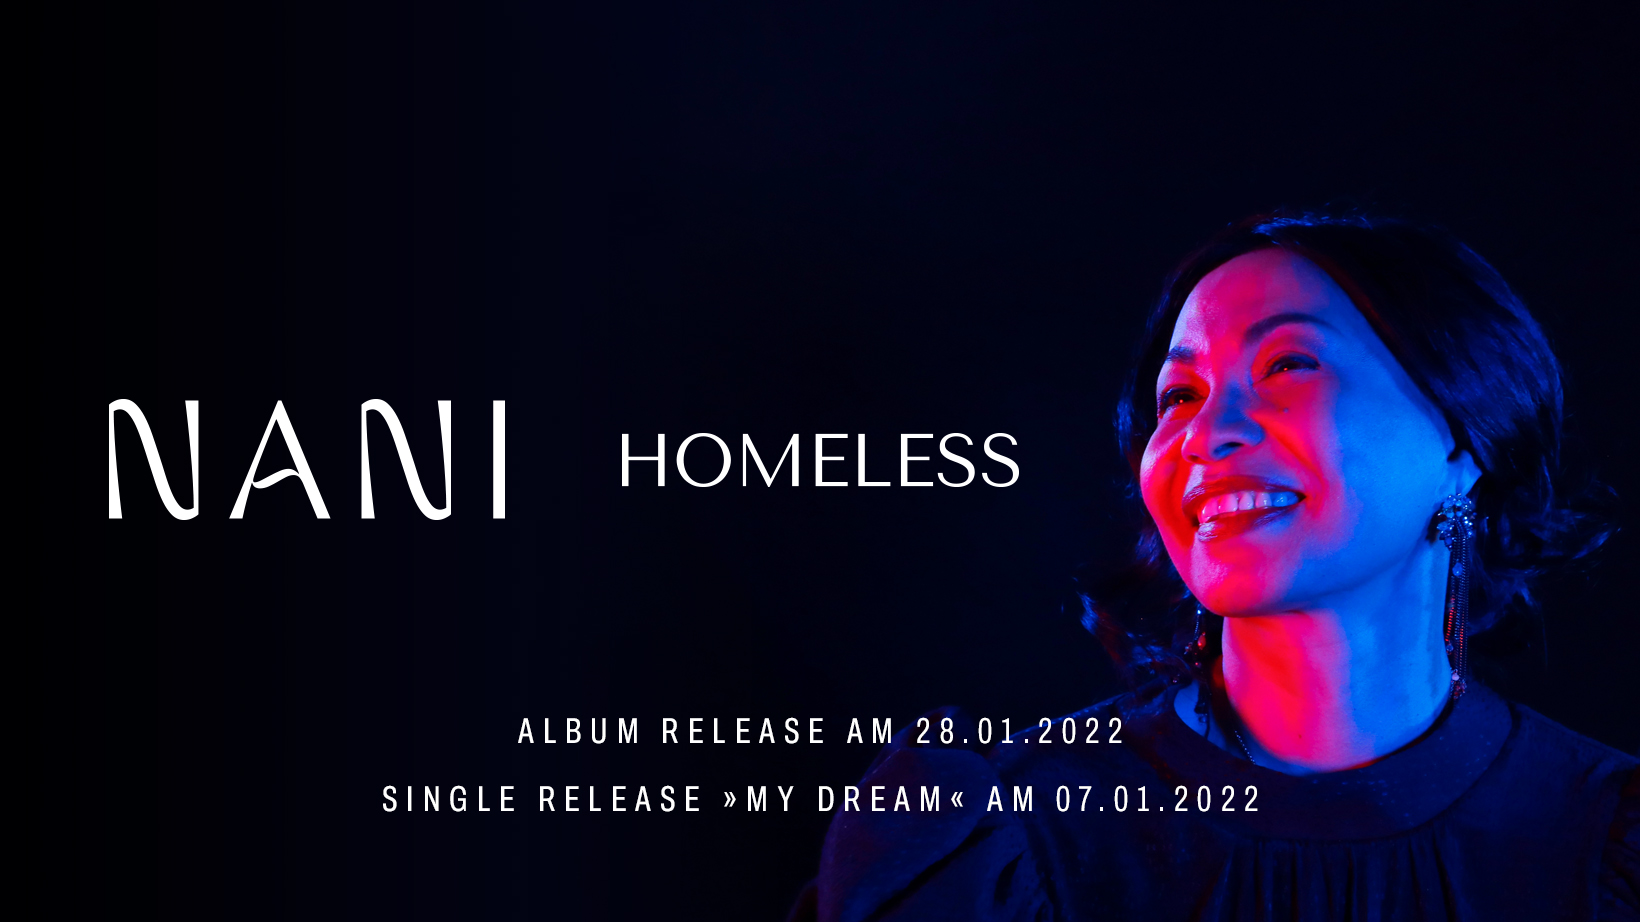 Nani Album Homeless Veröffentlichung 28.01.2022